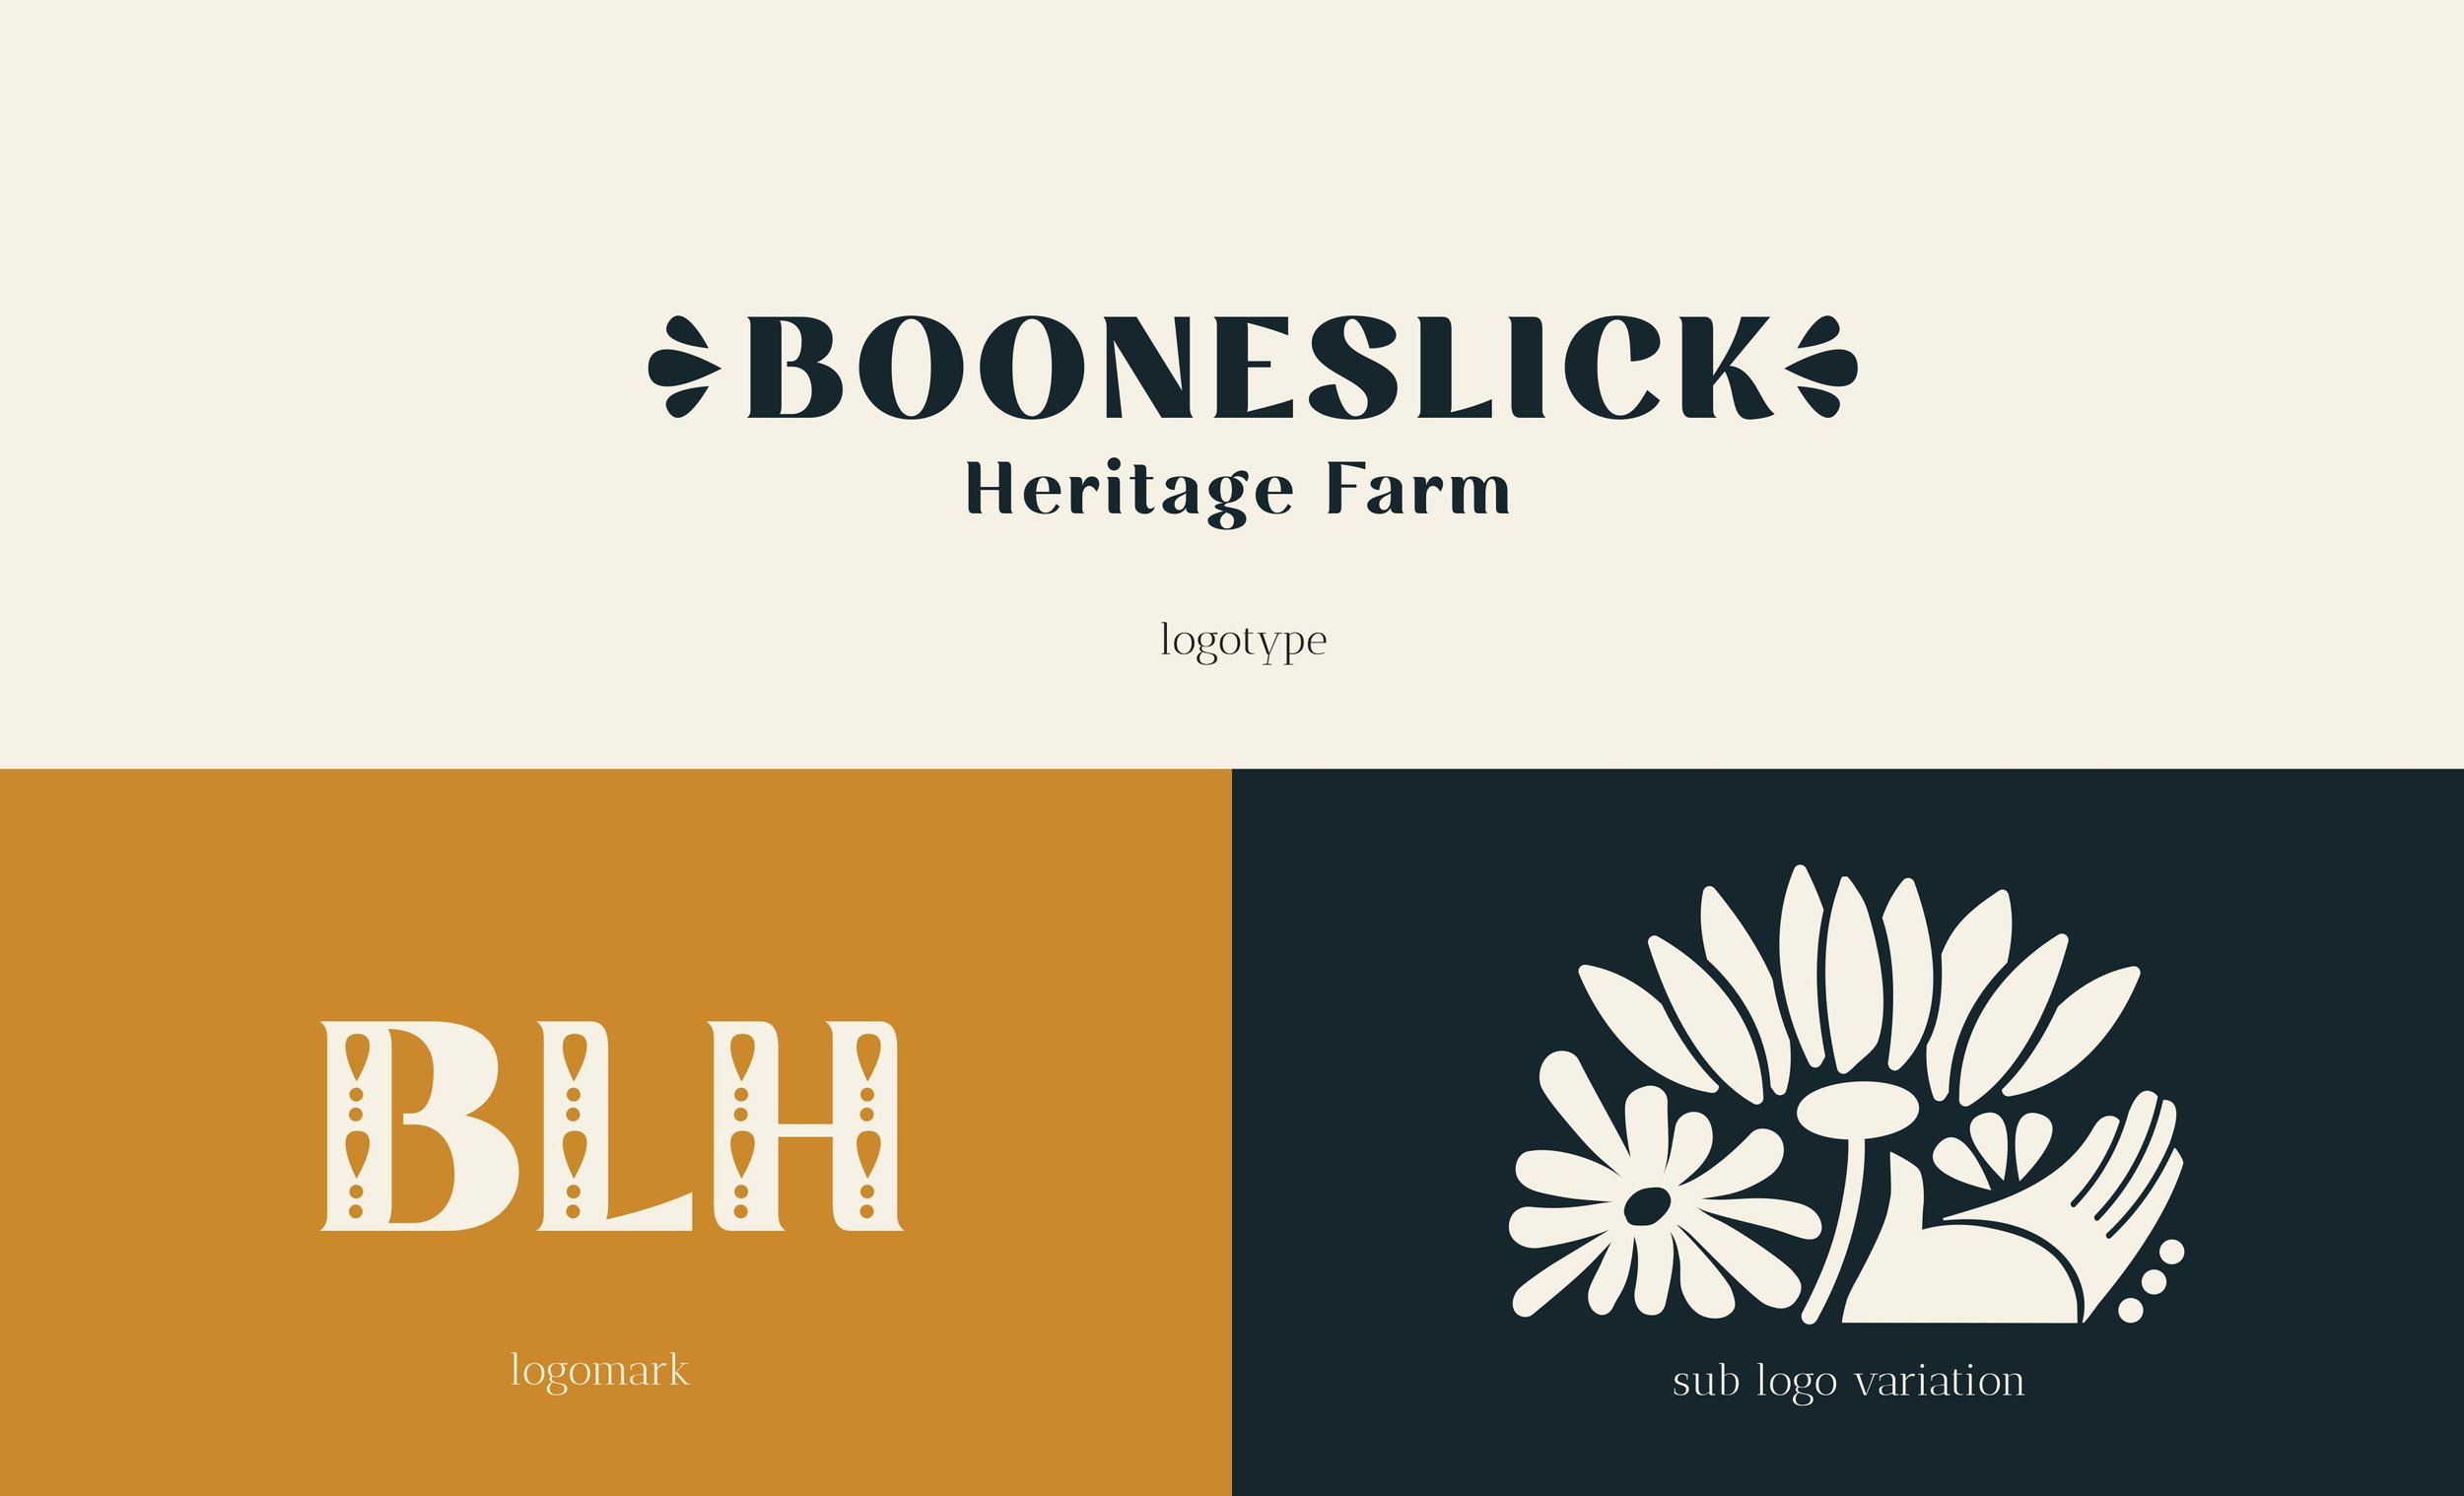  Booneslick Heritage Farm logo, sublogo, and icon for BLH Farms farmers market vendor. 